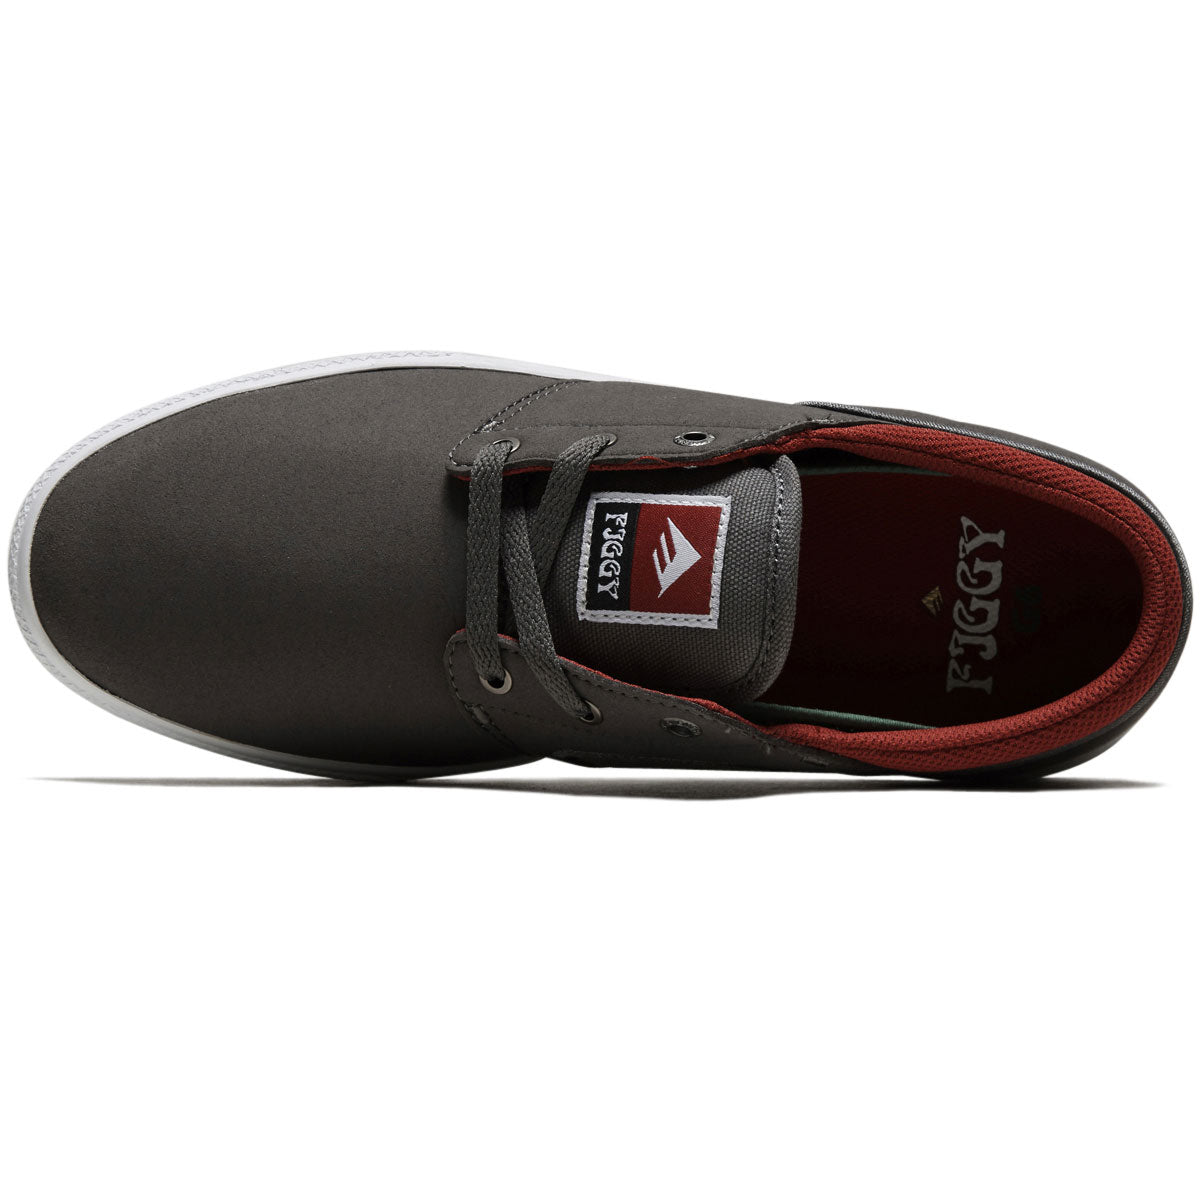 Emerica Figgy G6 Shoes - Grey image 3